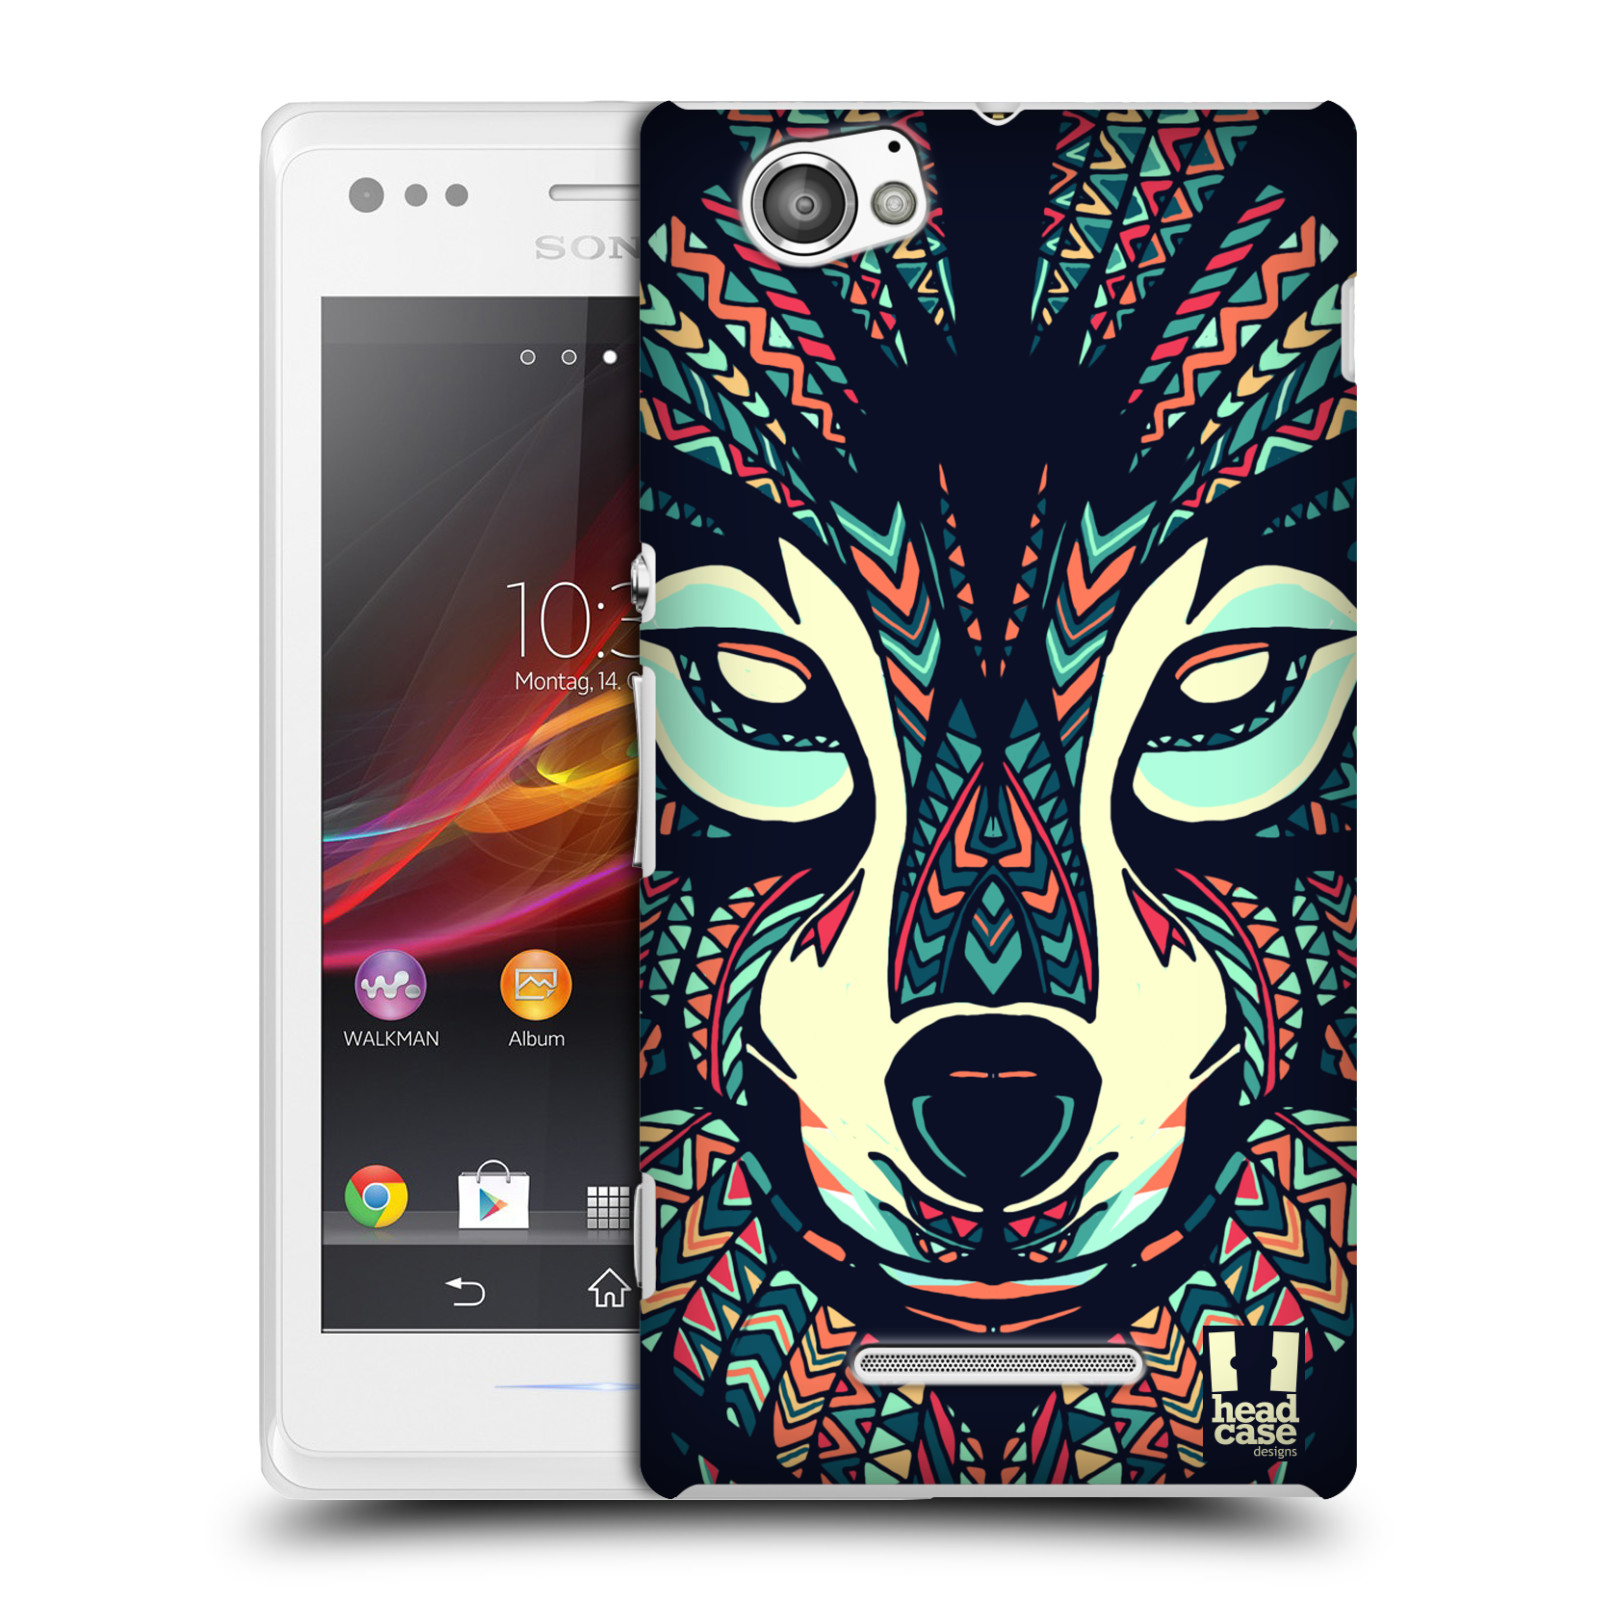 HEAD CASE plastový obal na mobil Sony Xperia M vzor Aztécký motiv zvíře 3 vlk